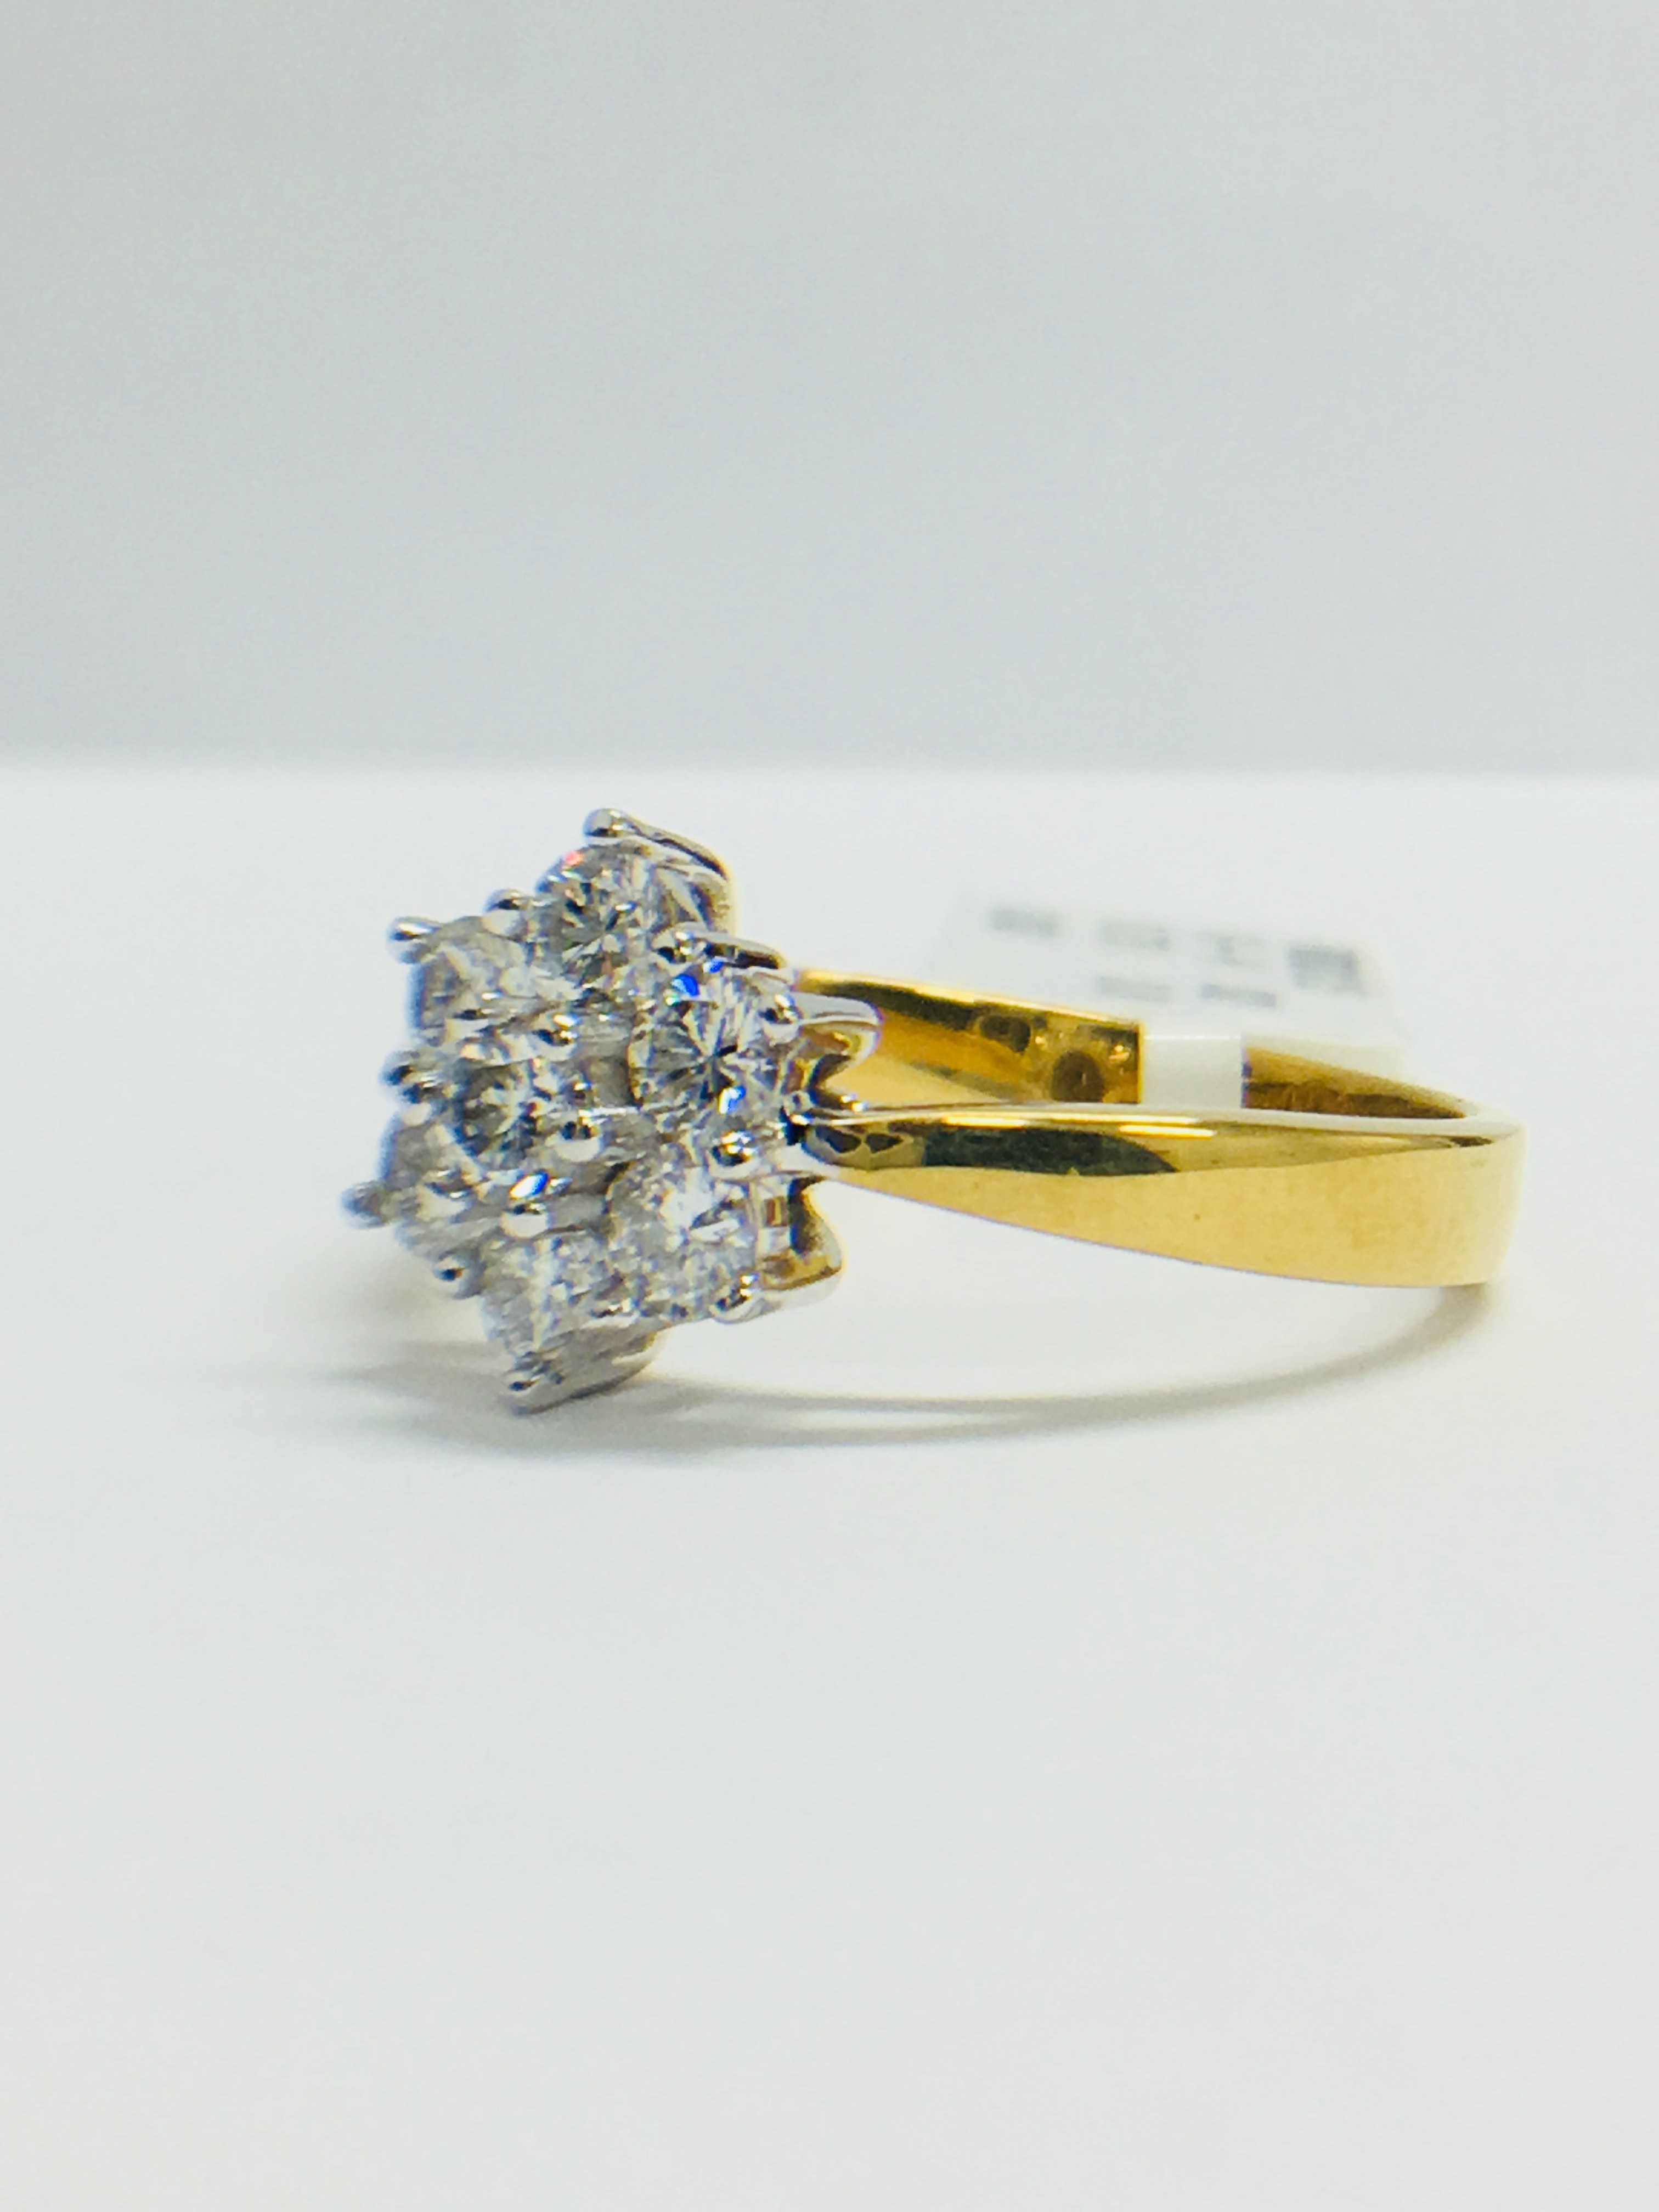 18ct yellow/white Diamond cluster Ring - Image 2 of 10